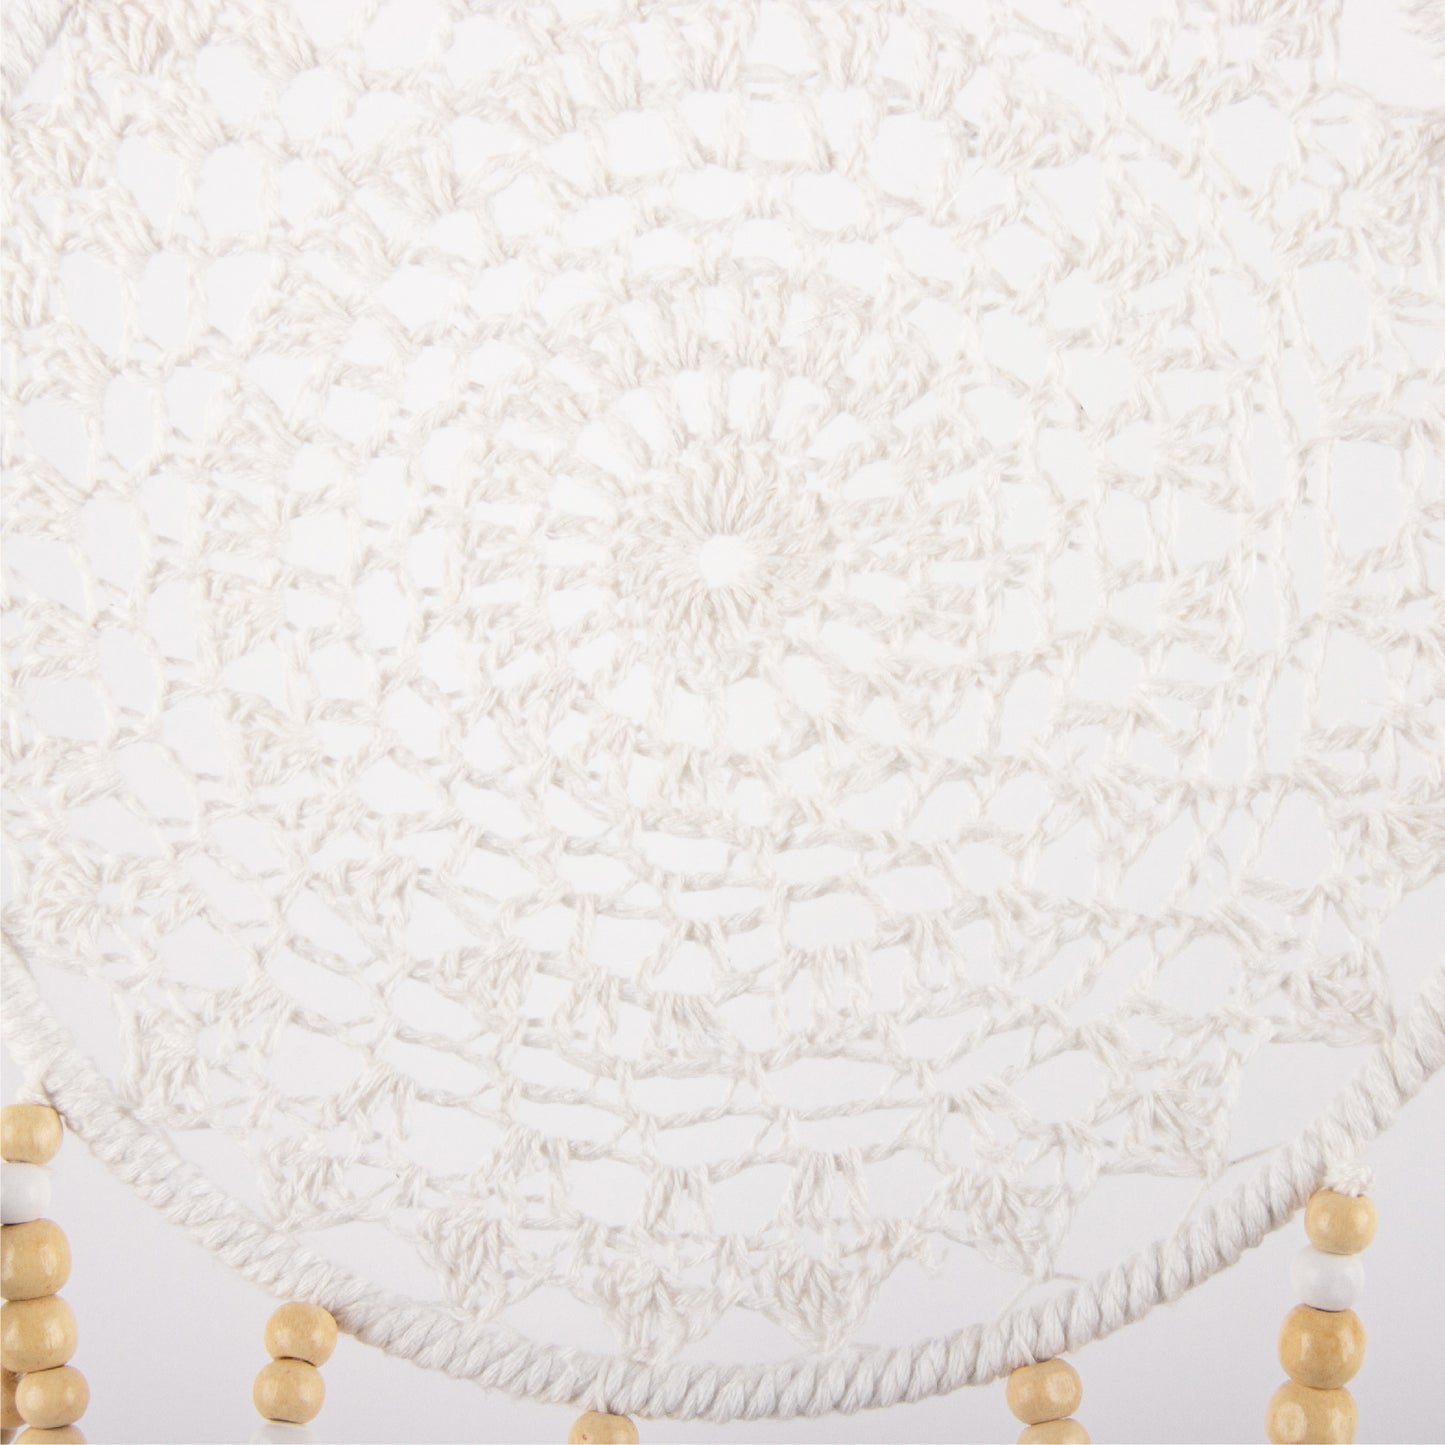 Macrame Wallhanging - Bodhi Mandala Crochet